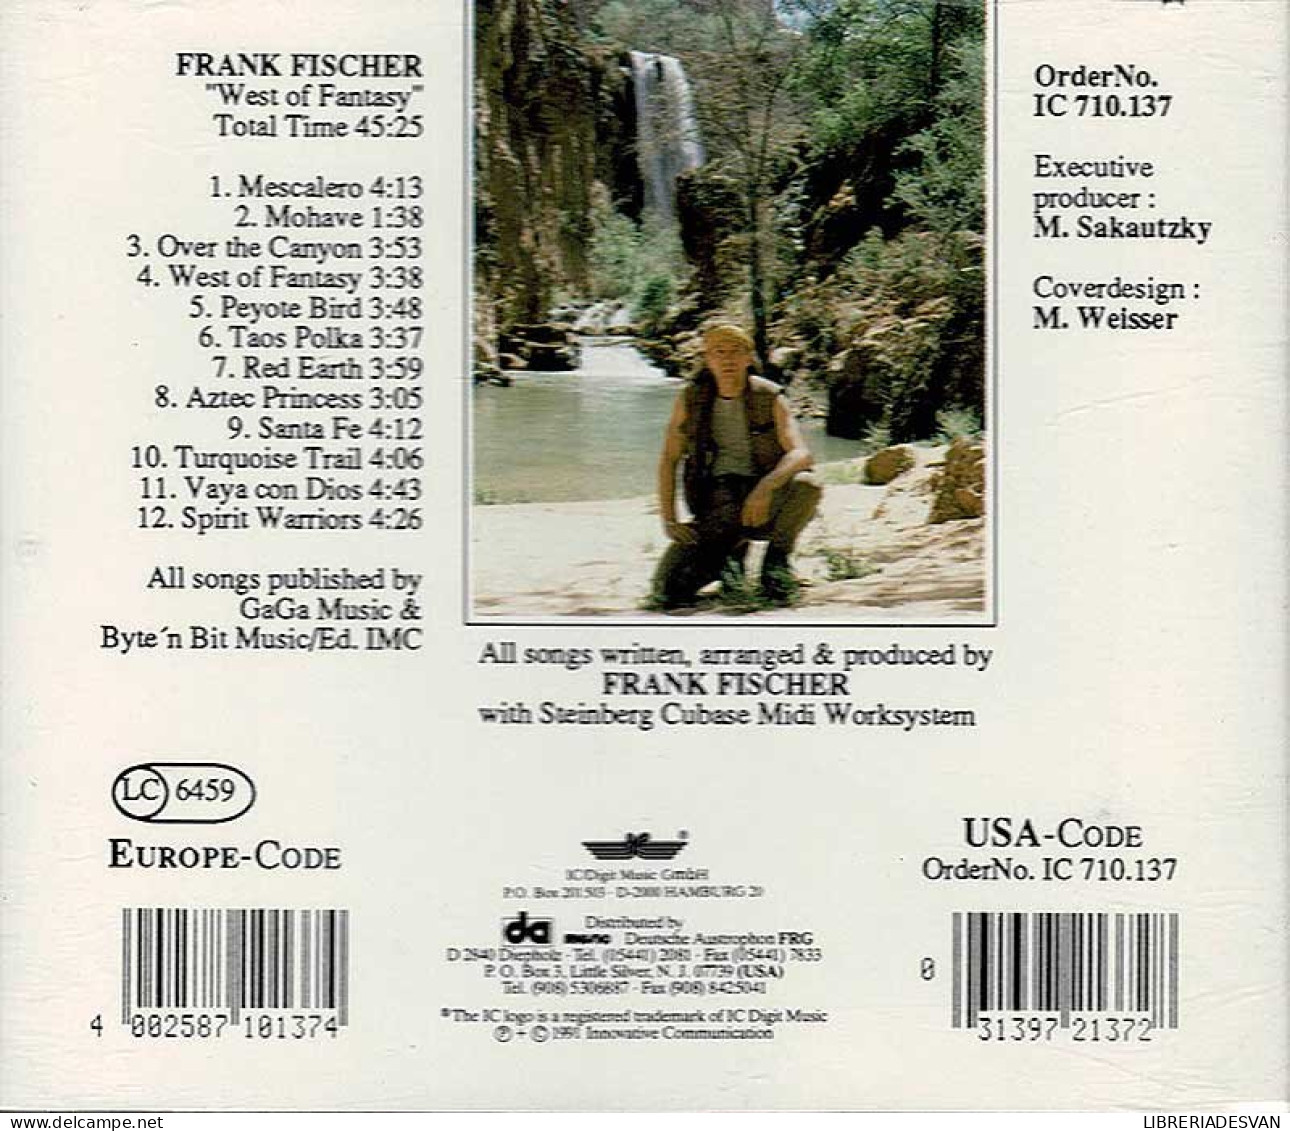 Frank Fischer - West Of Fantasy. CD - Nueva Era (New Age)